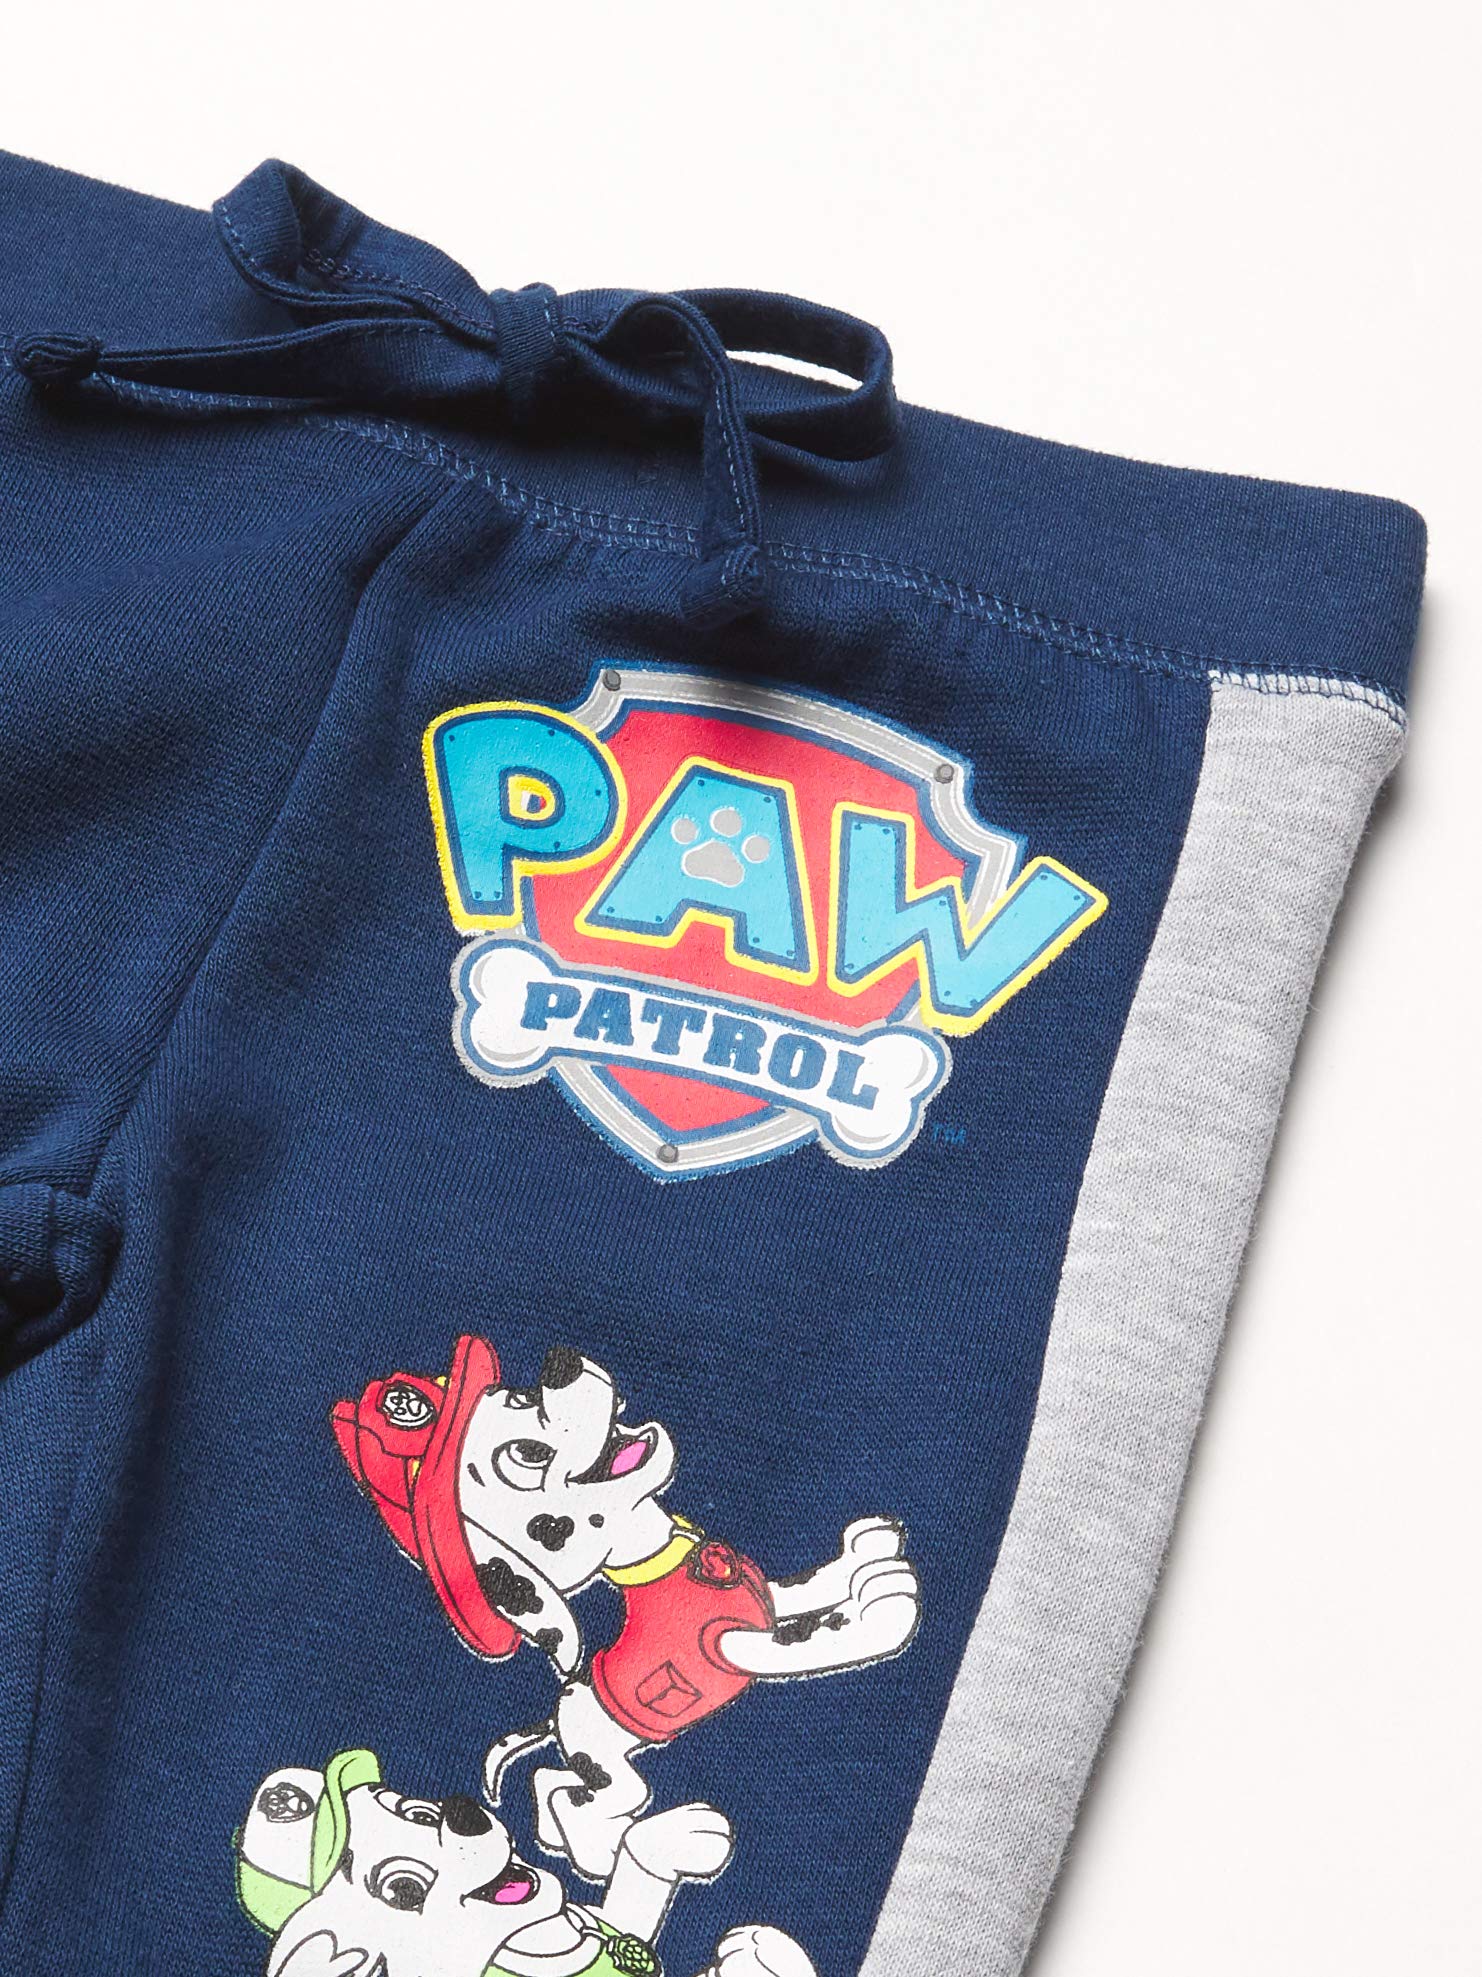 Nickelodeon Paw Patrol Graphic Hoodie, T-Shirt, & Jogger Sweatpant, 3-Piece Athleisure Outfit Bundle Set-Toddler Boys-Nick Jr